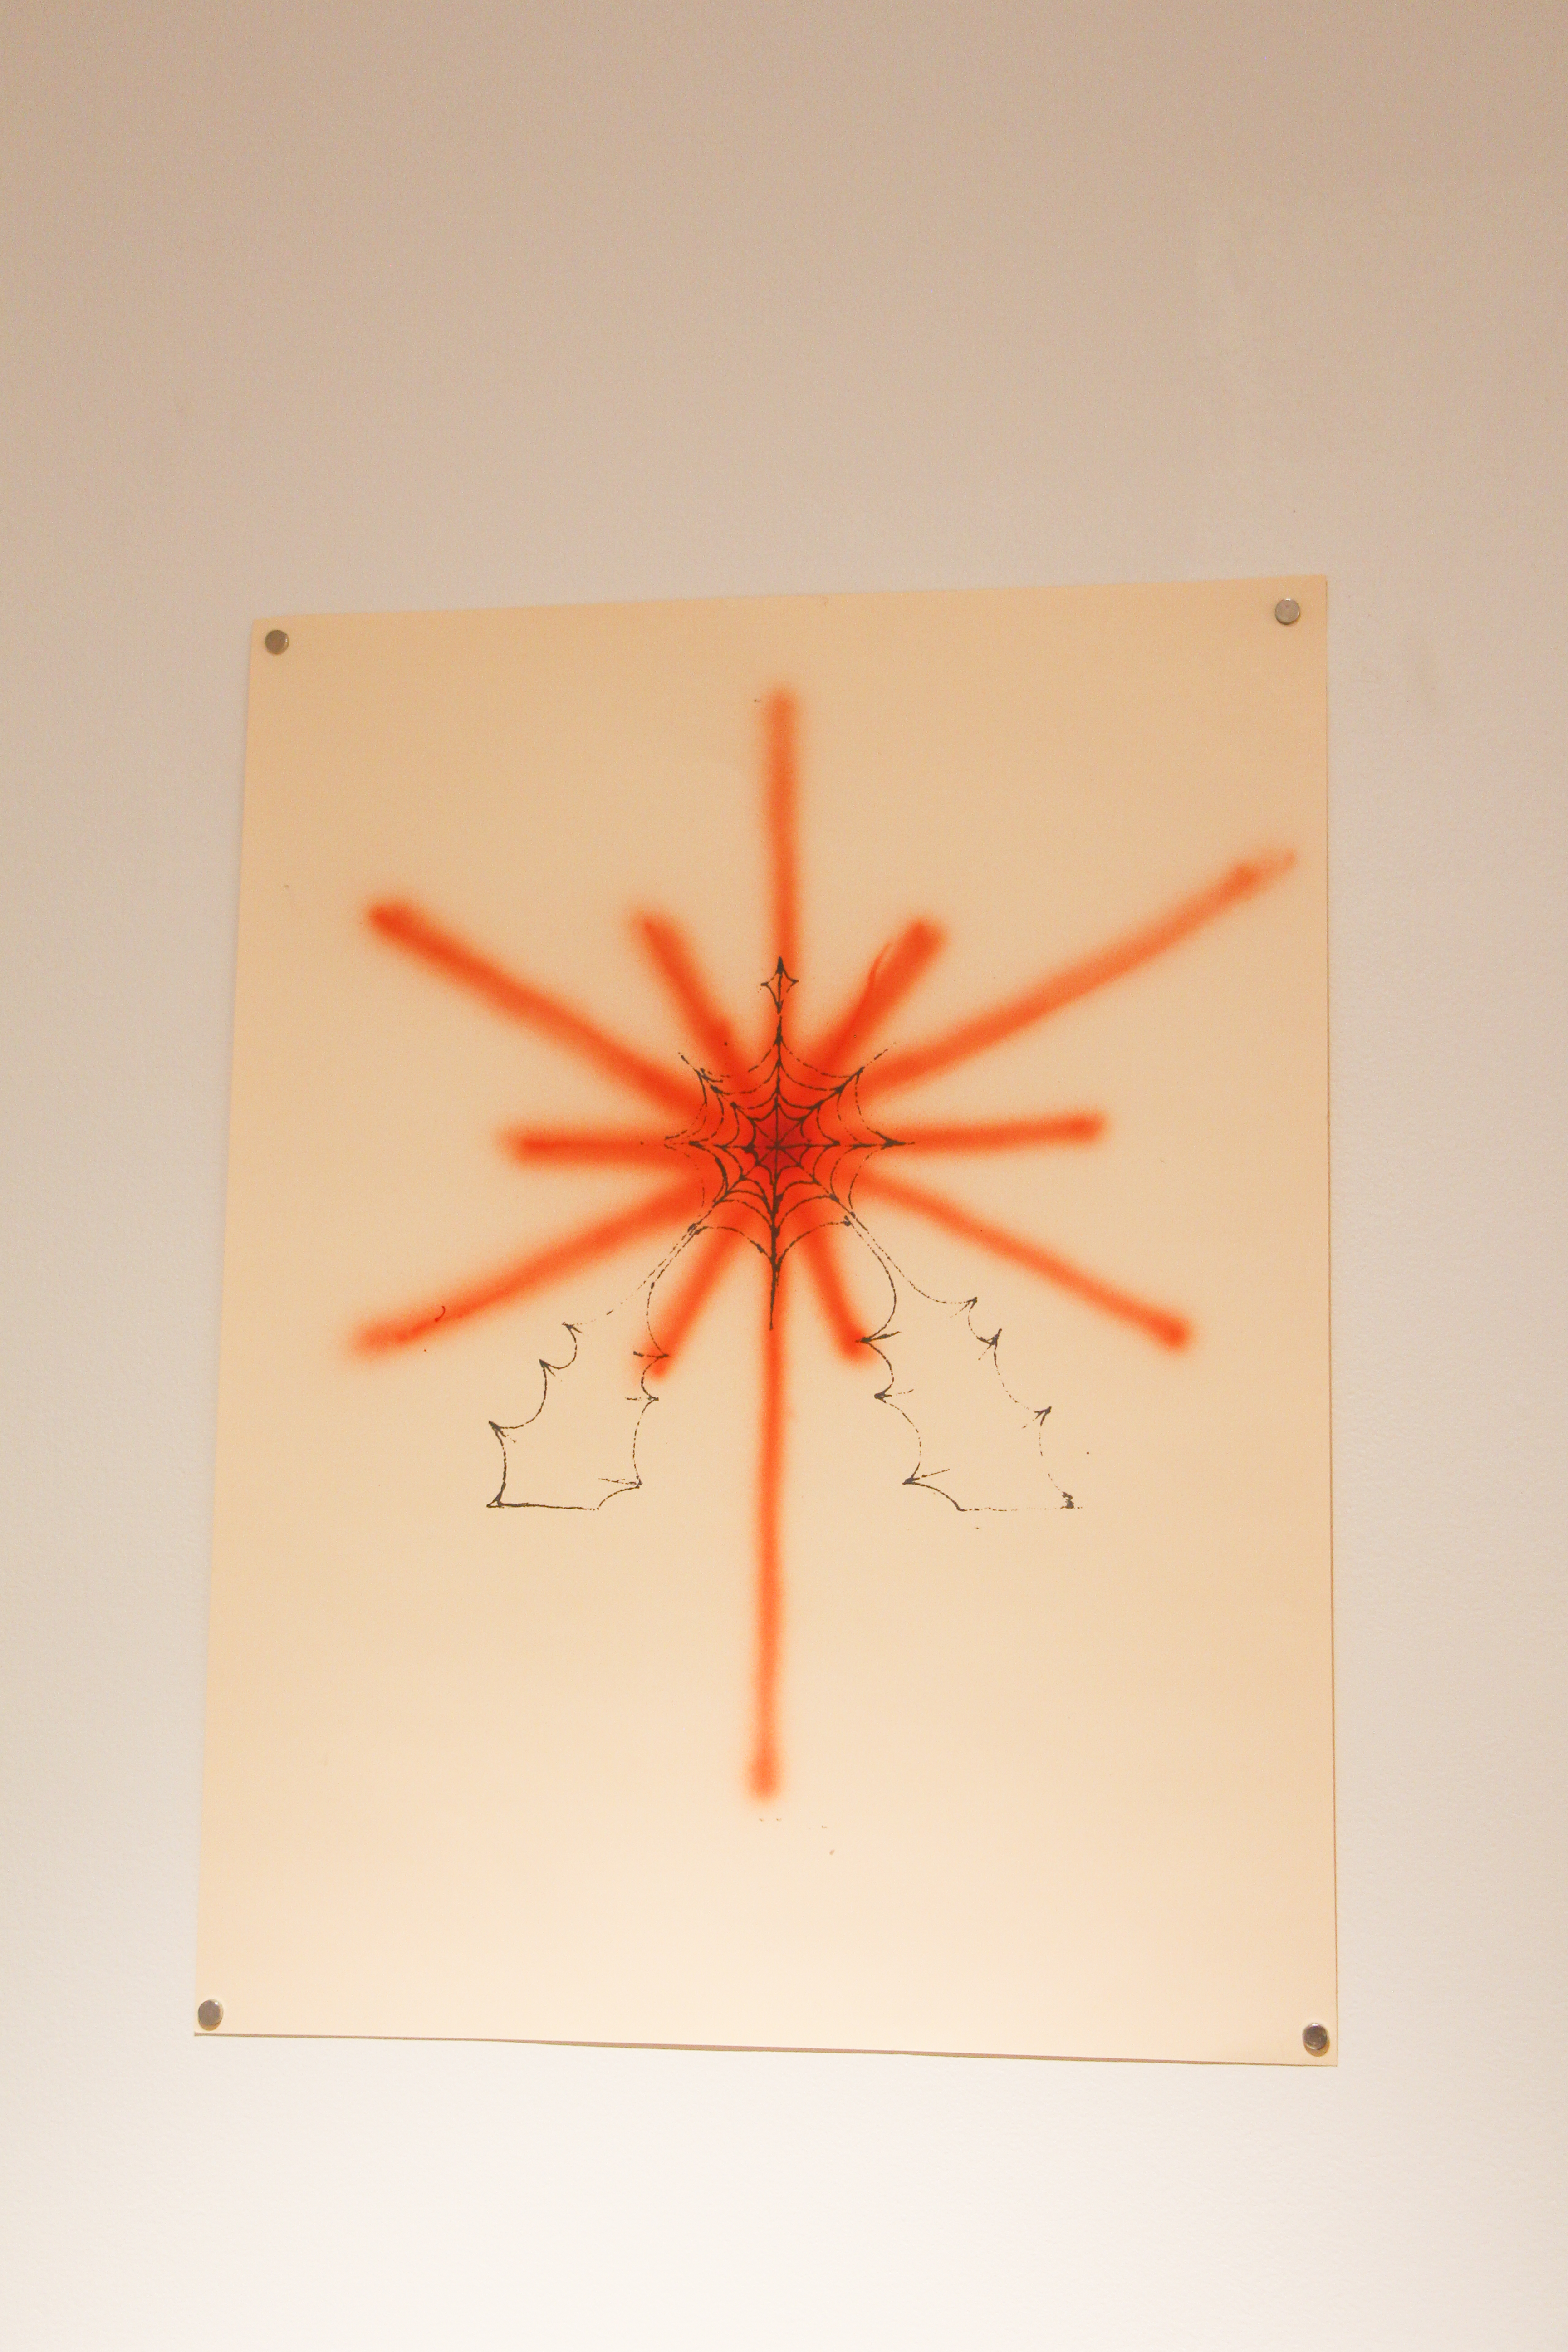 Oreka James, "Untitled Fig. 2," 2022. Acrylic screenprint and airbrush on paper.